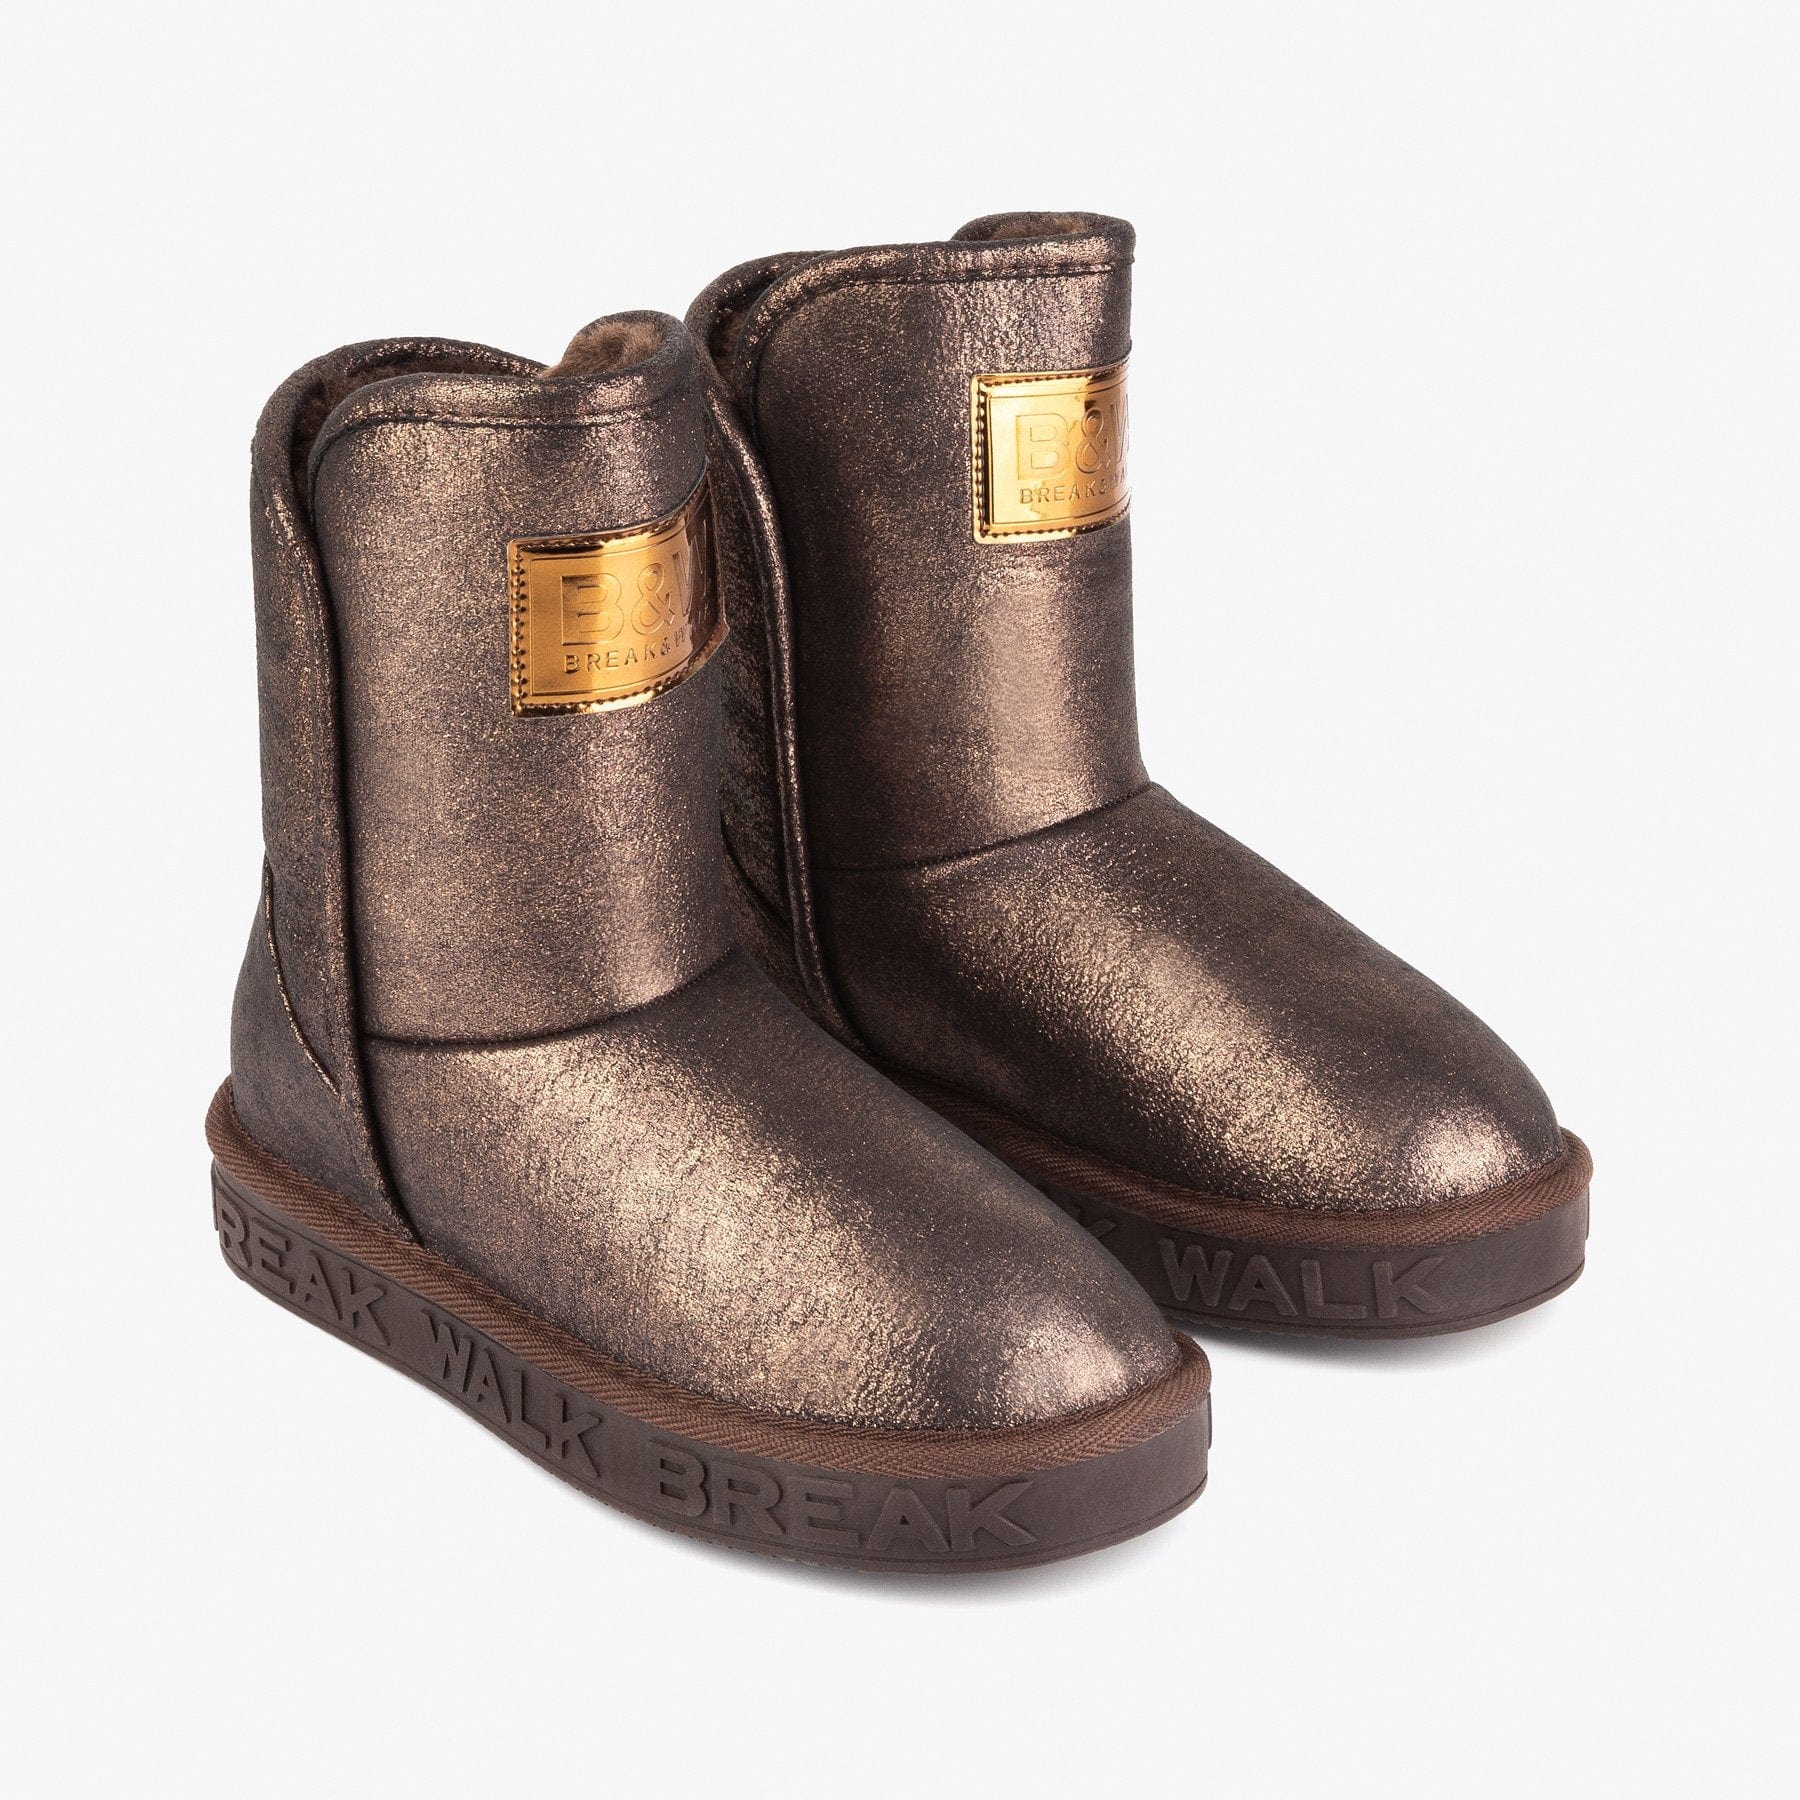 CONGUITOS Shoes Mum's Bronze Metallized Australian Boots